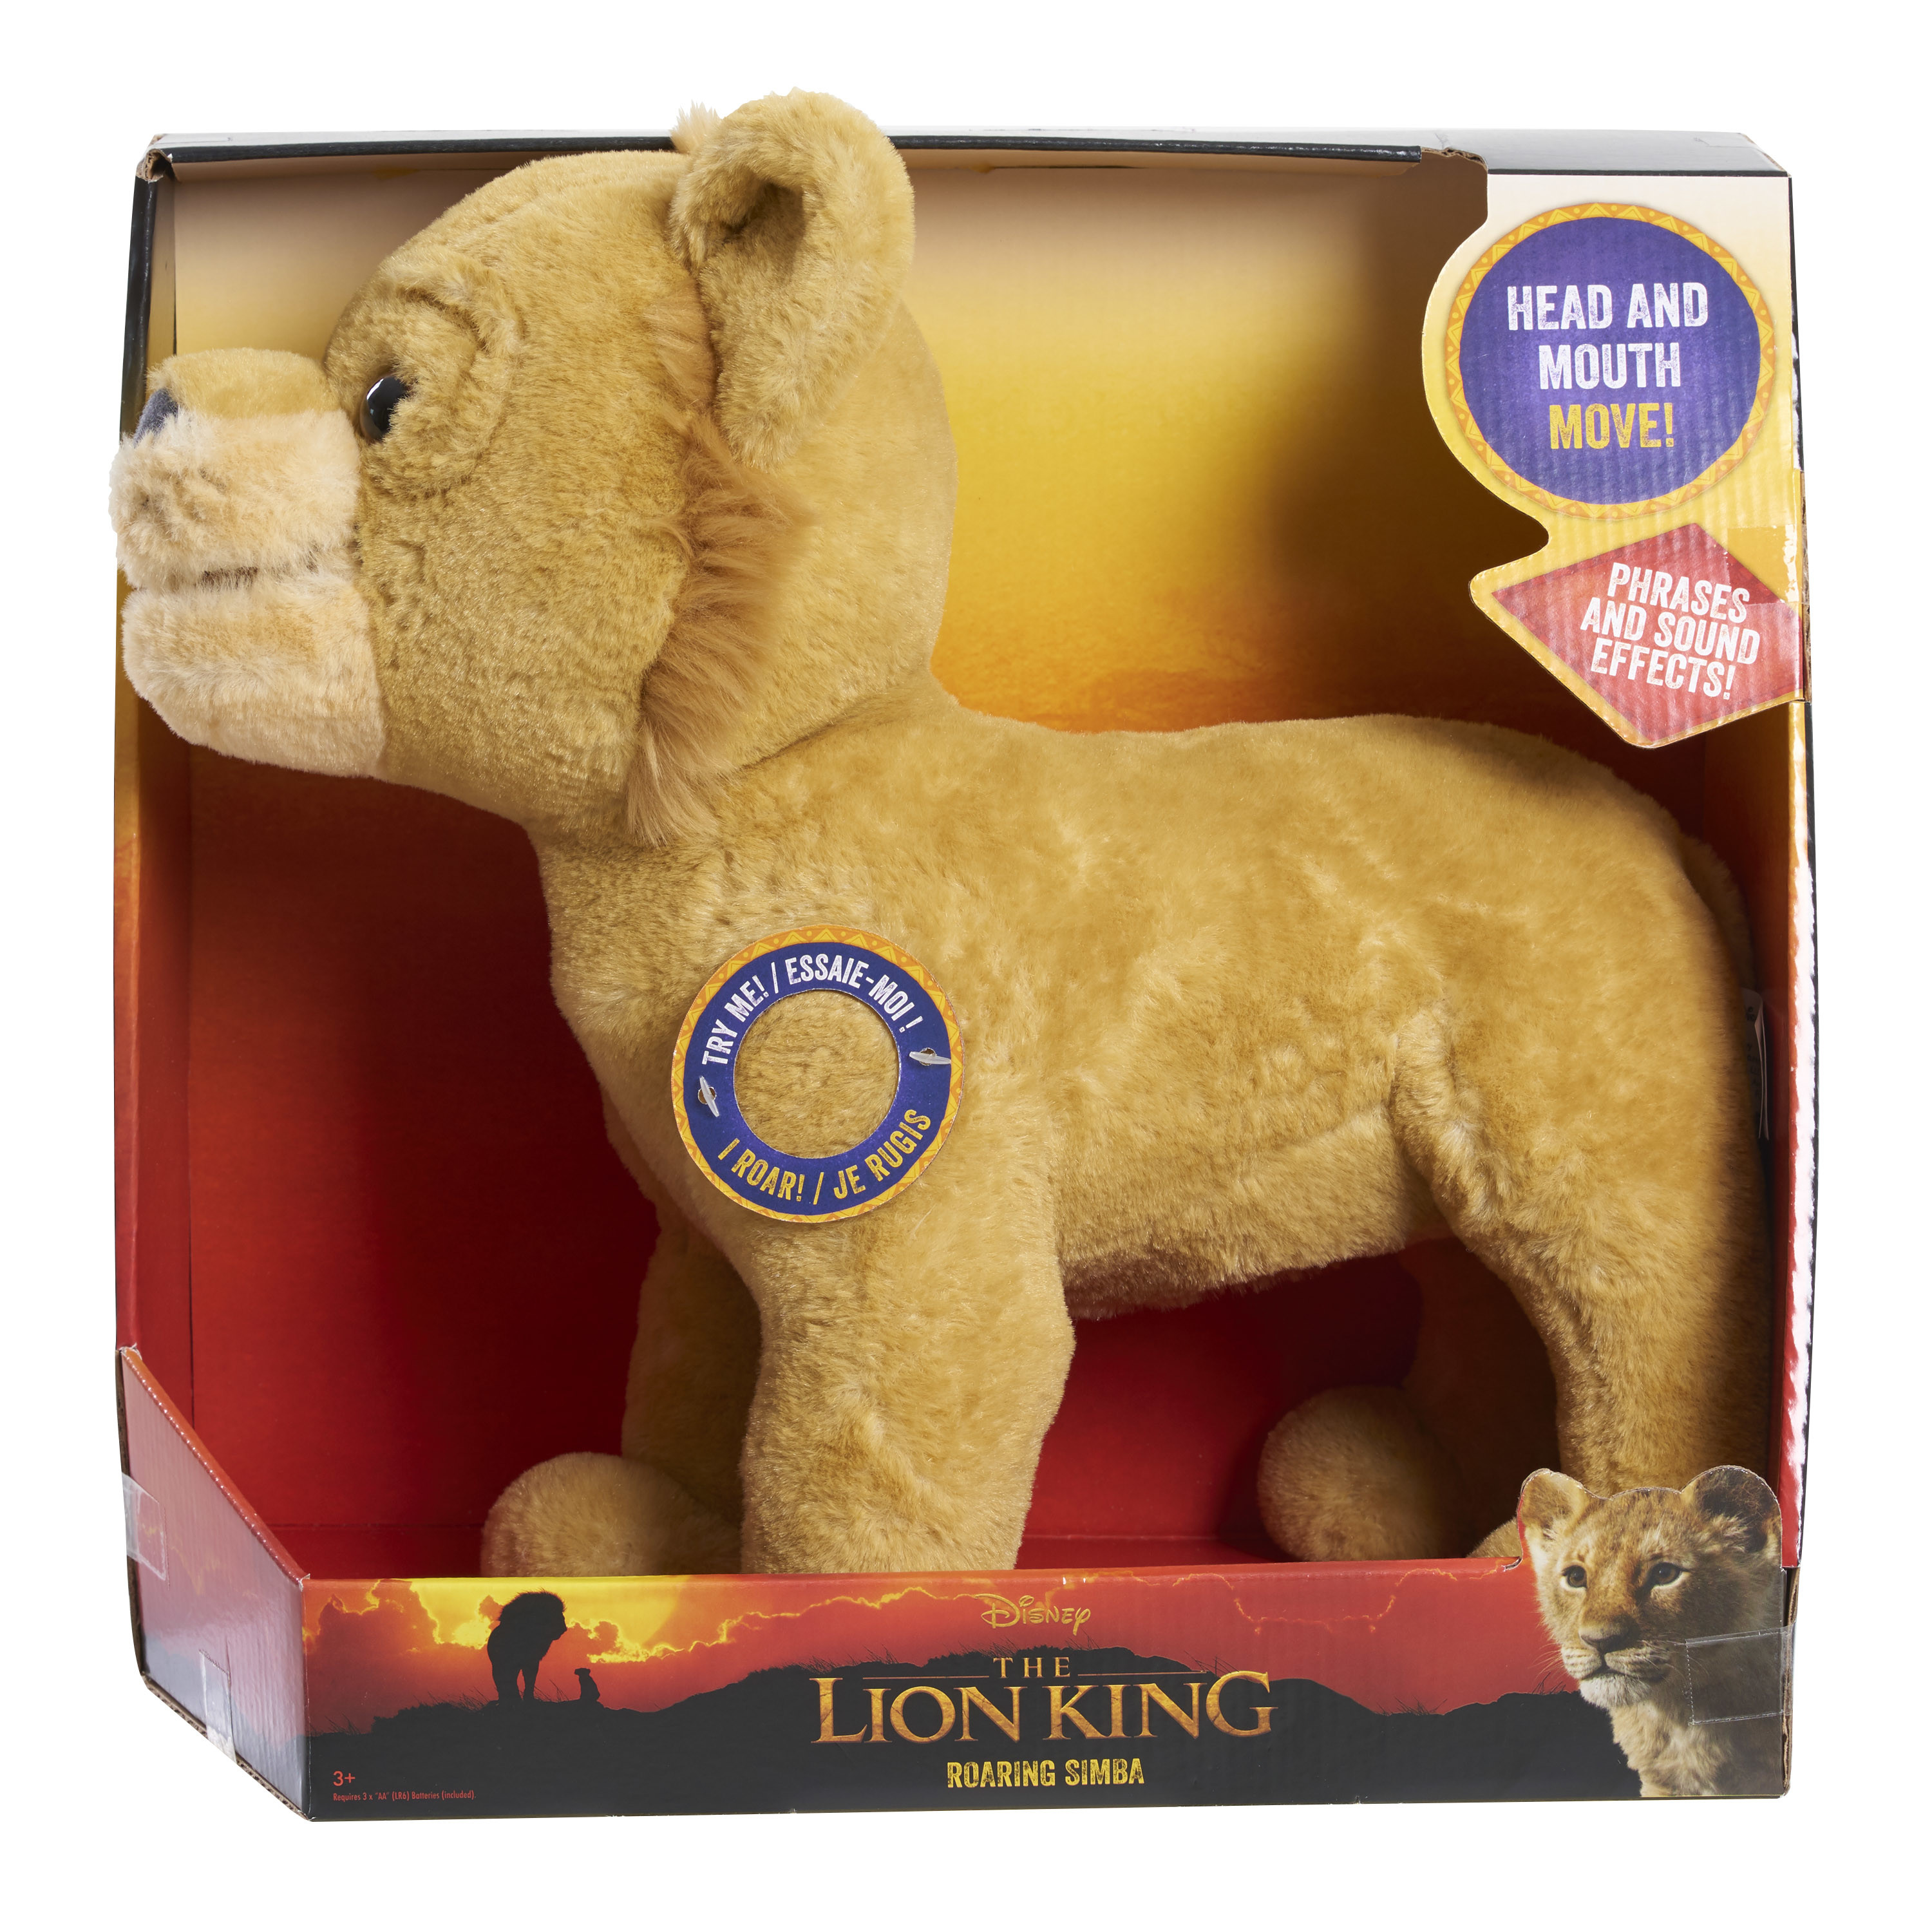 Disney's The Lion King Roaring Simba Plush - image 3 of 3